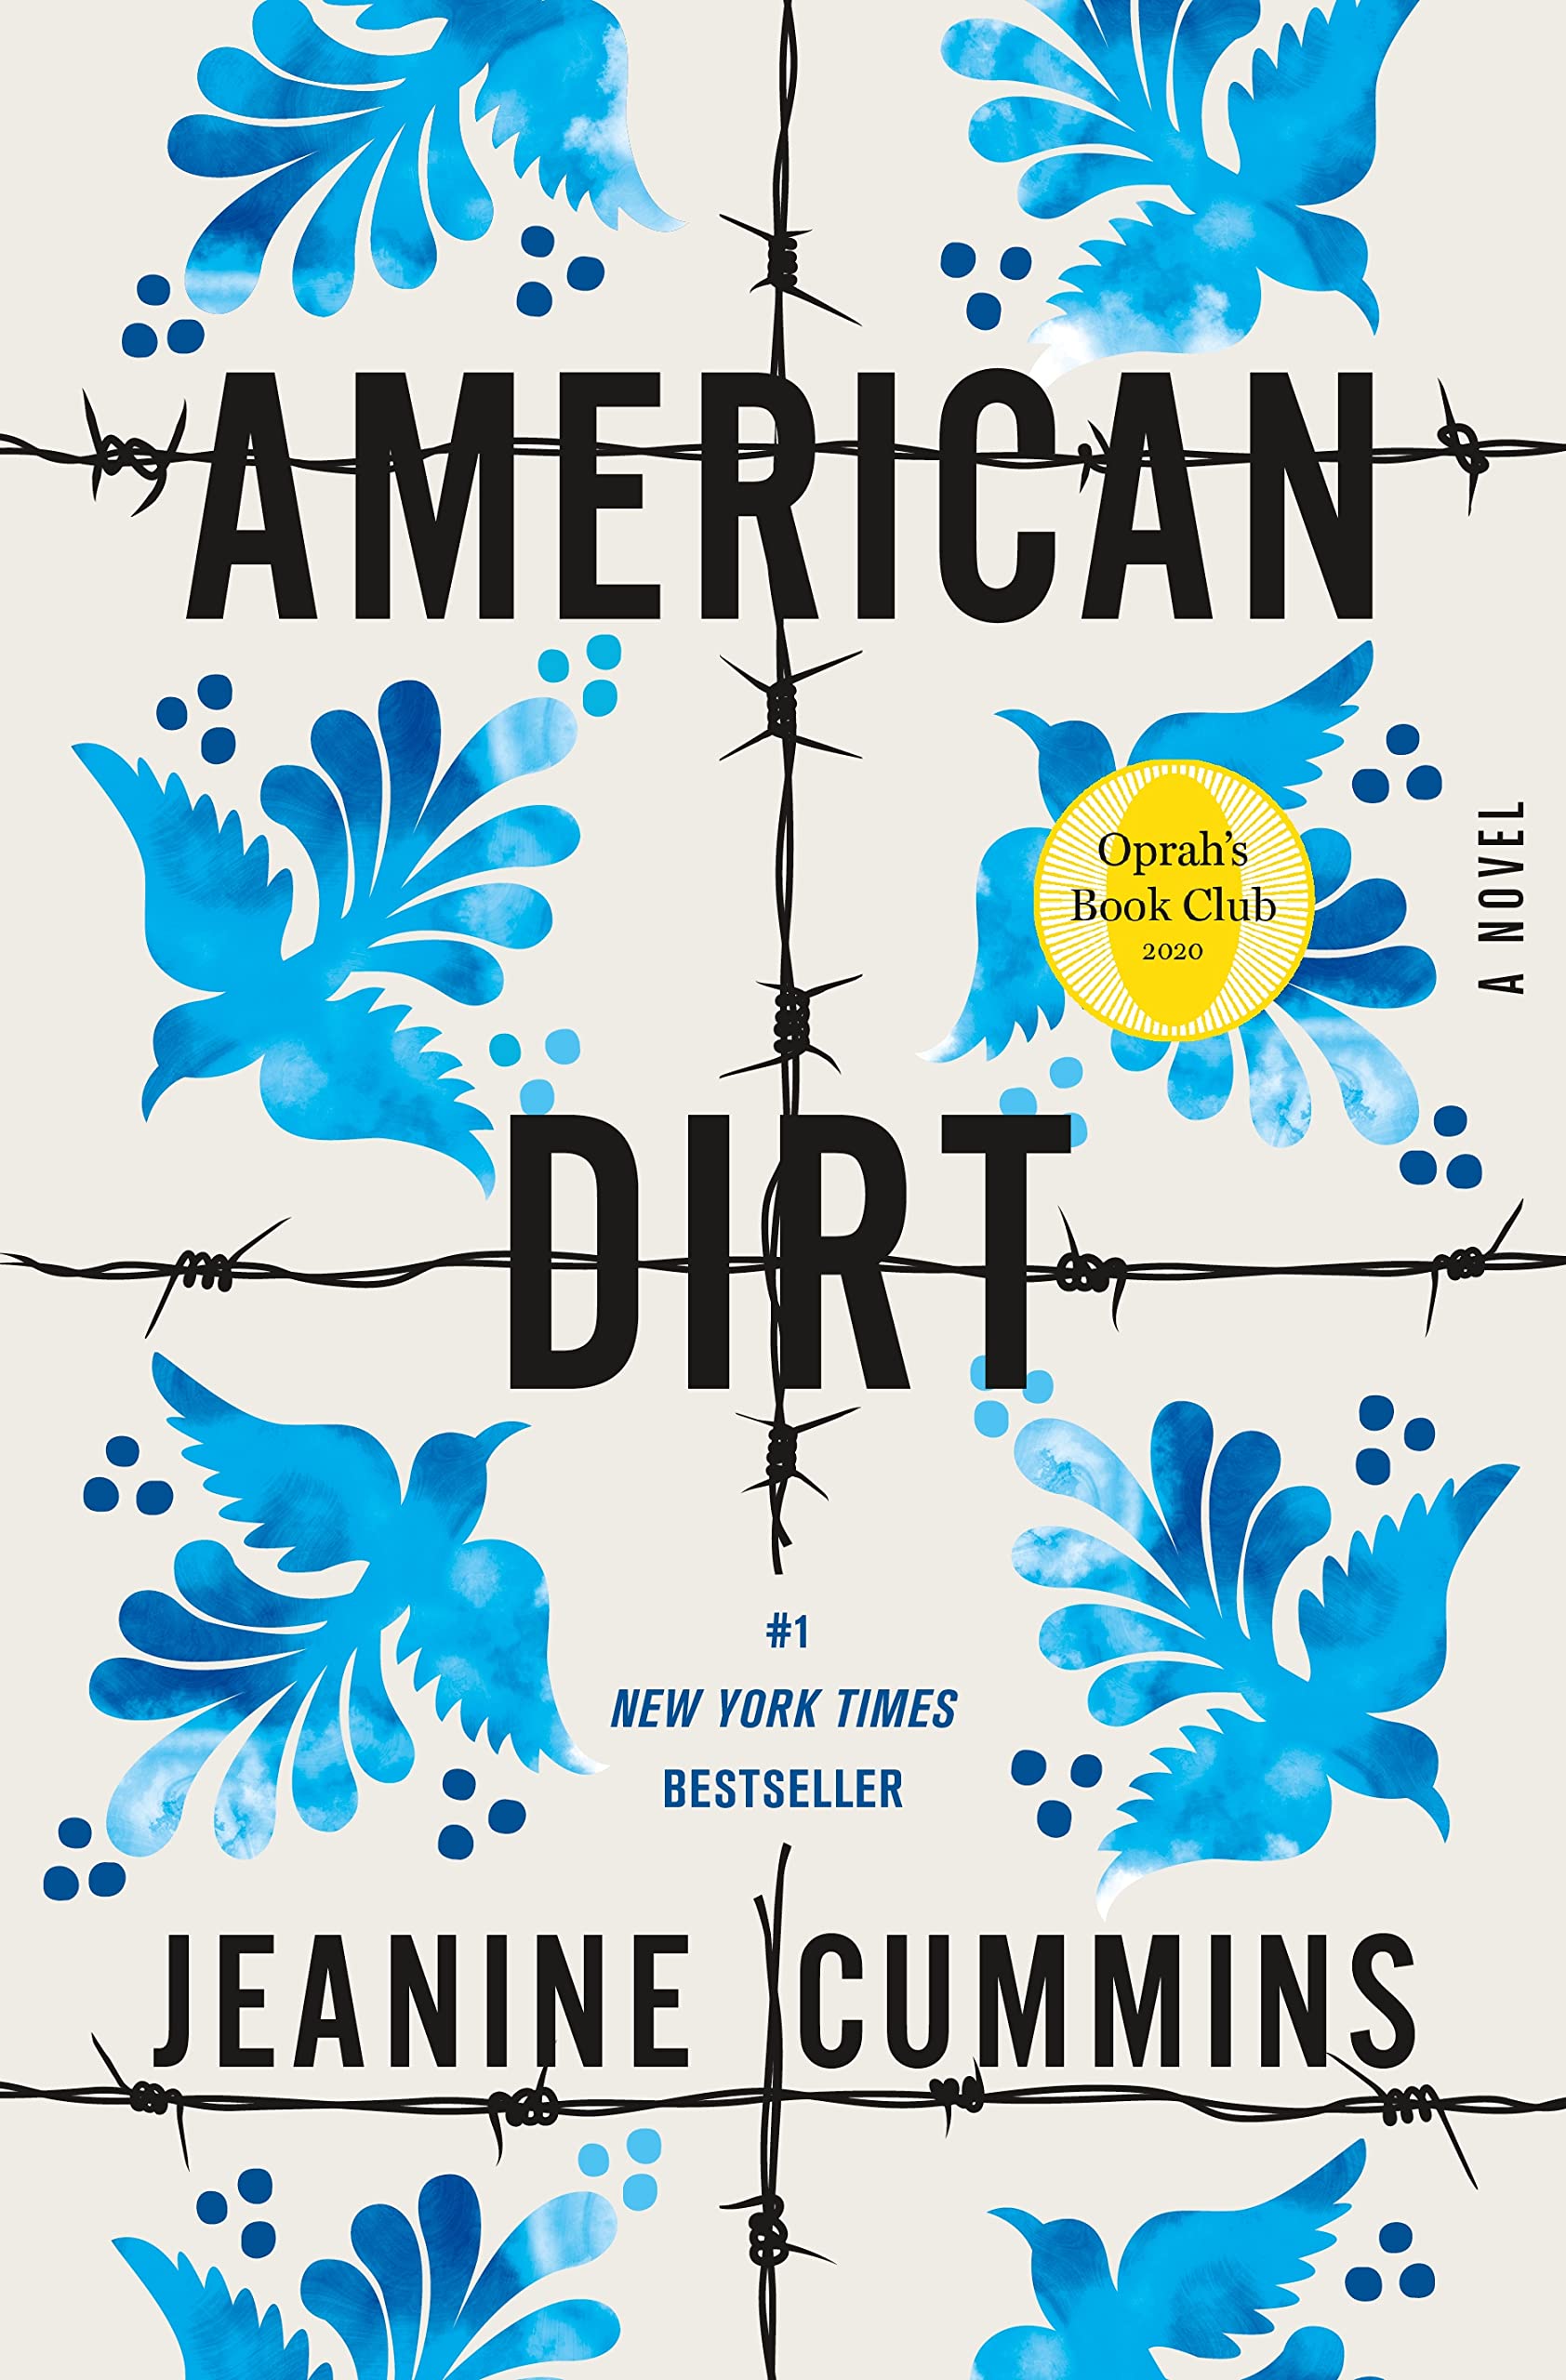 American Dirt by Jeanine Cummins book cover